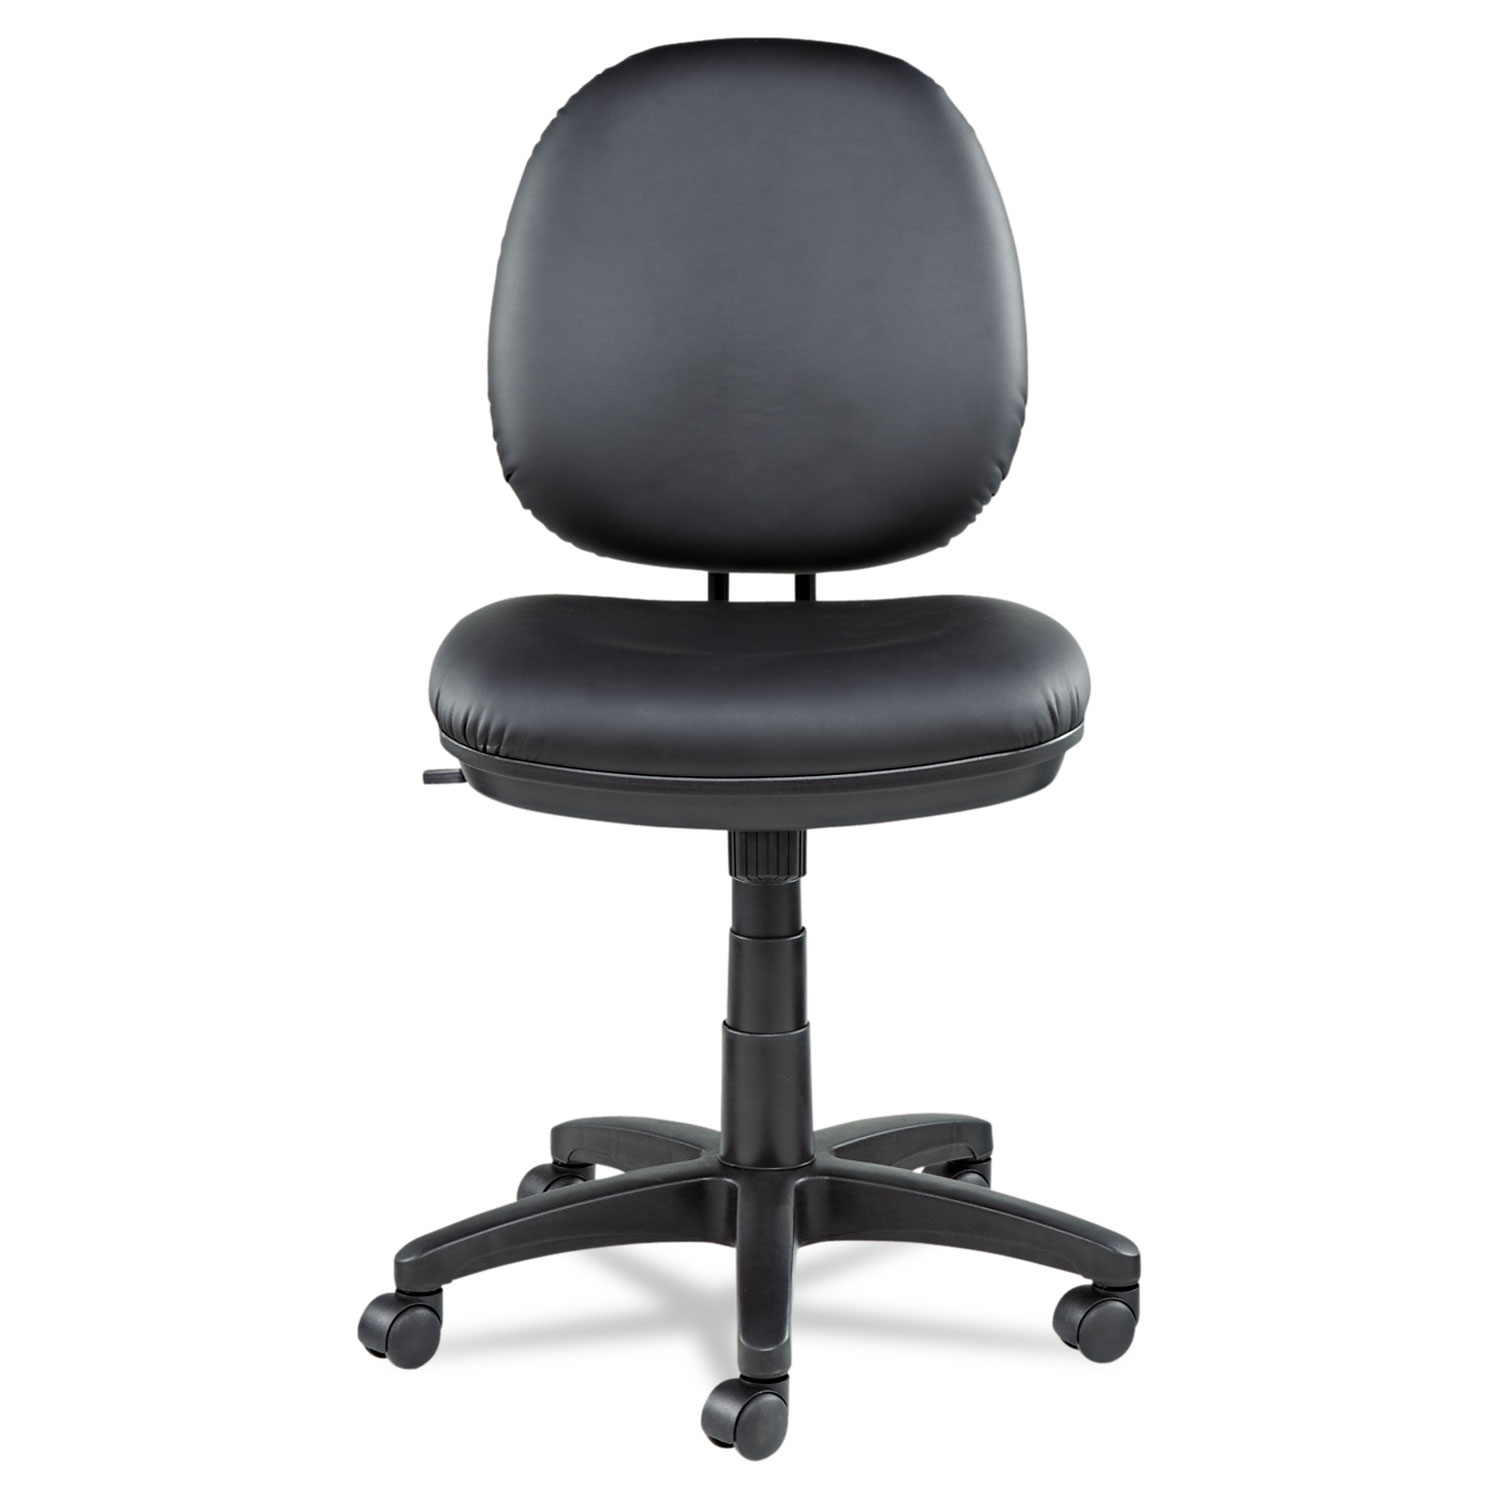  Alera ALEIN4819 Alera Interval Series Swivel/Tilt Task Chair, Supports up to 275 lbs., Black Seat/Black Back, Black Base (ALEIN4819) 